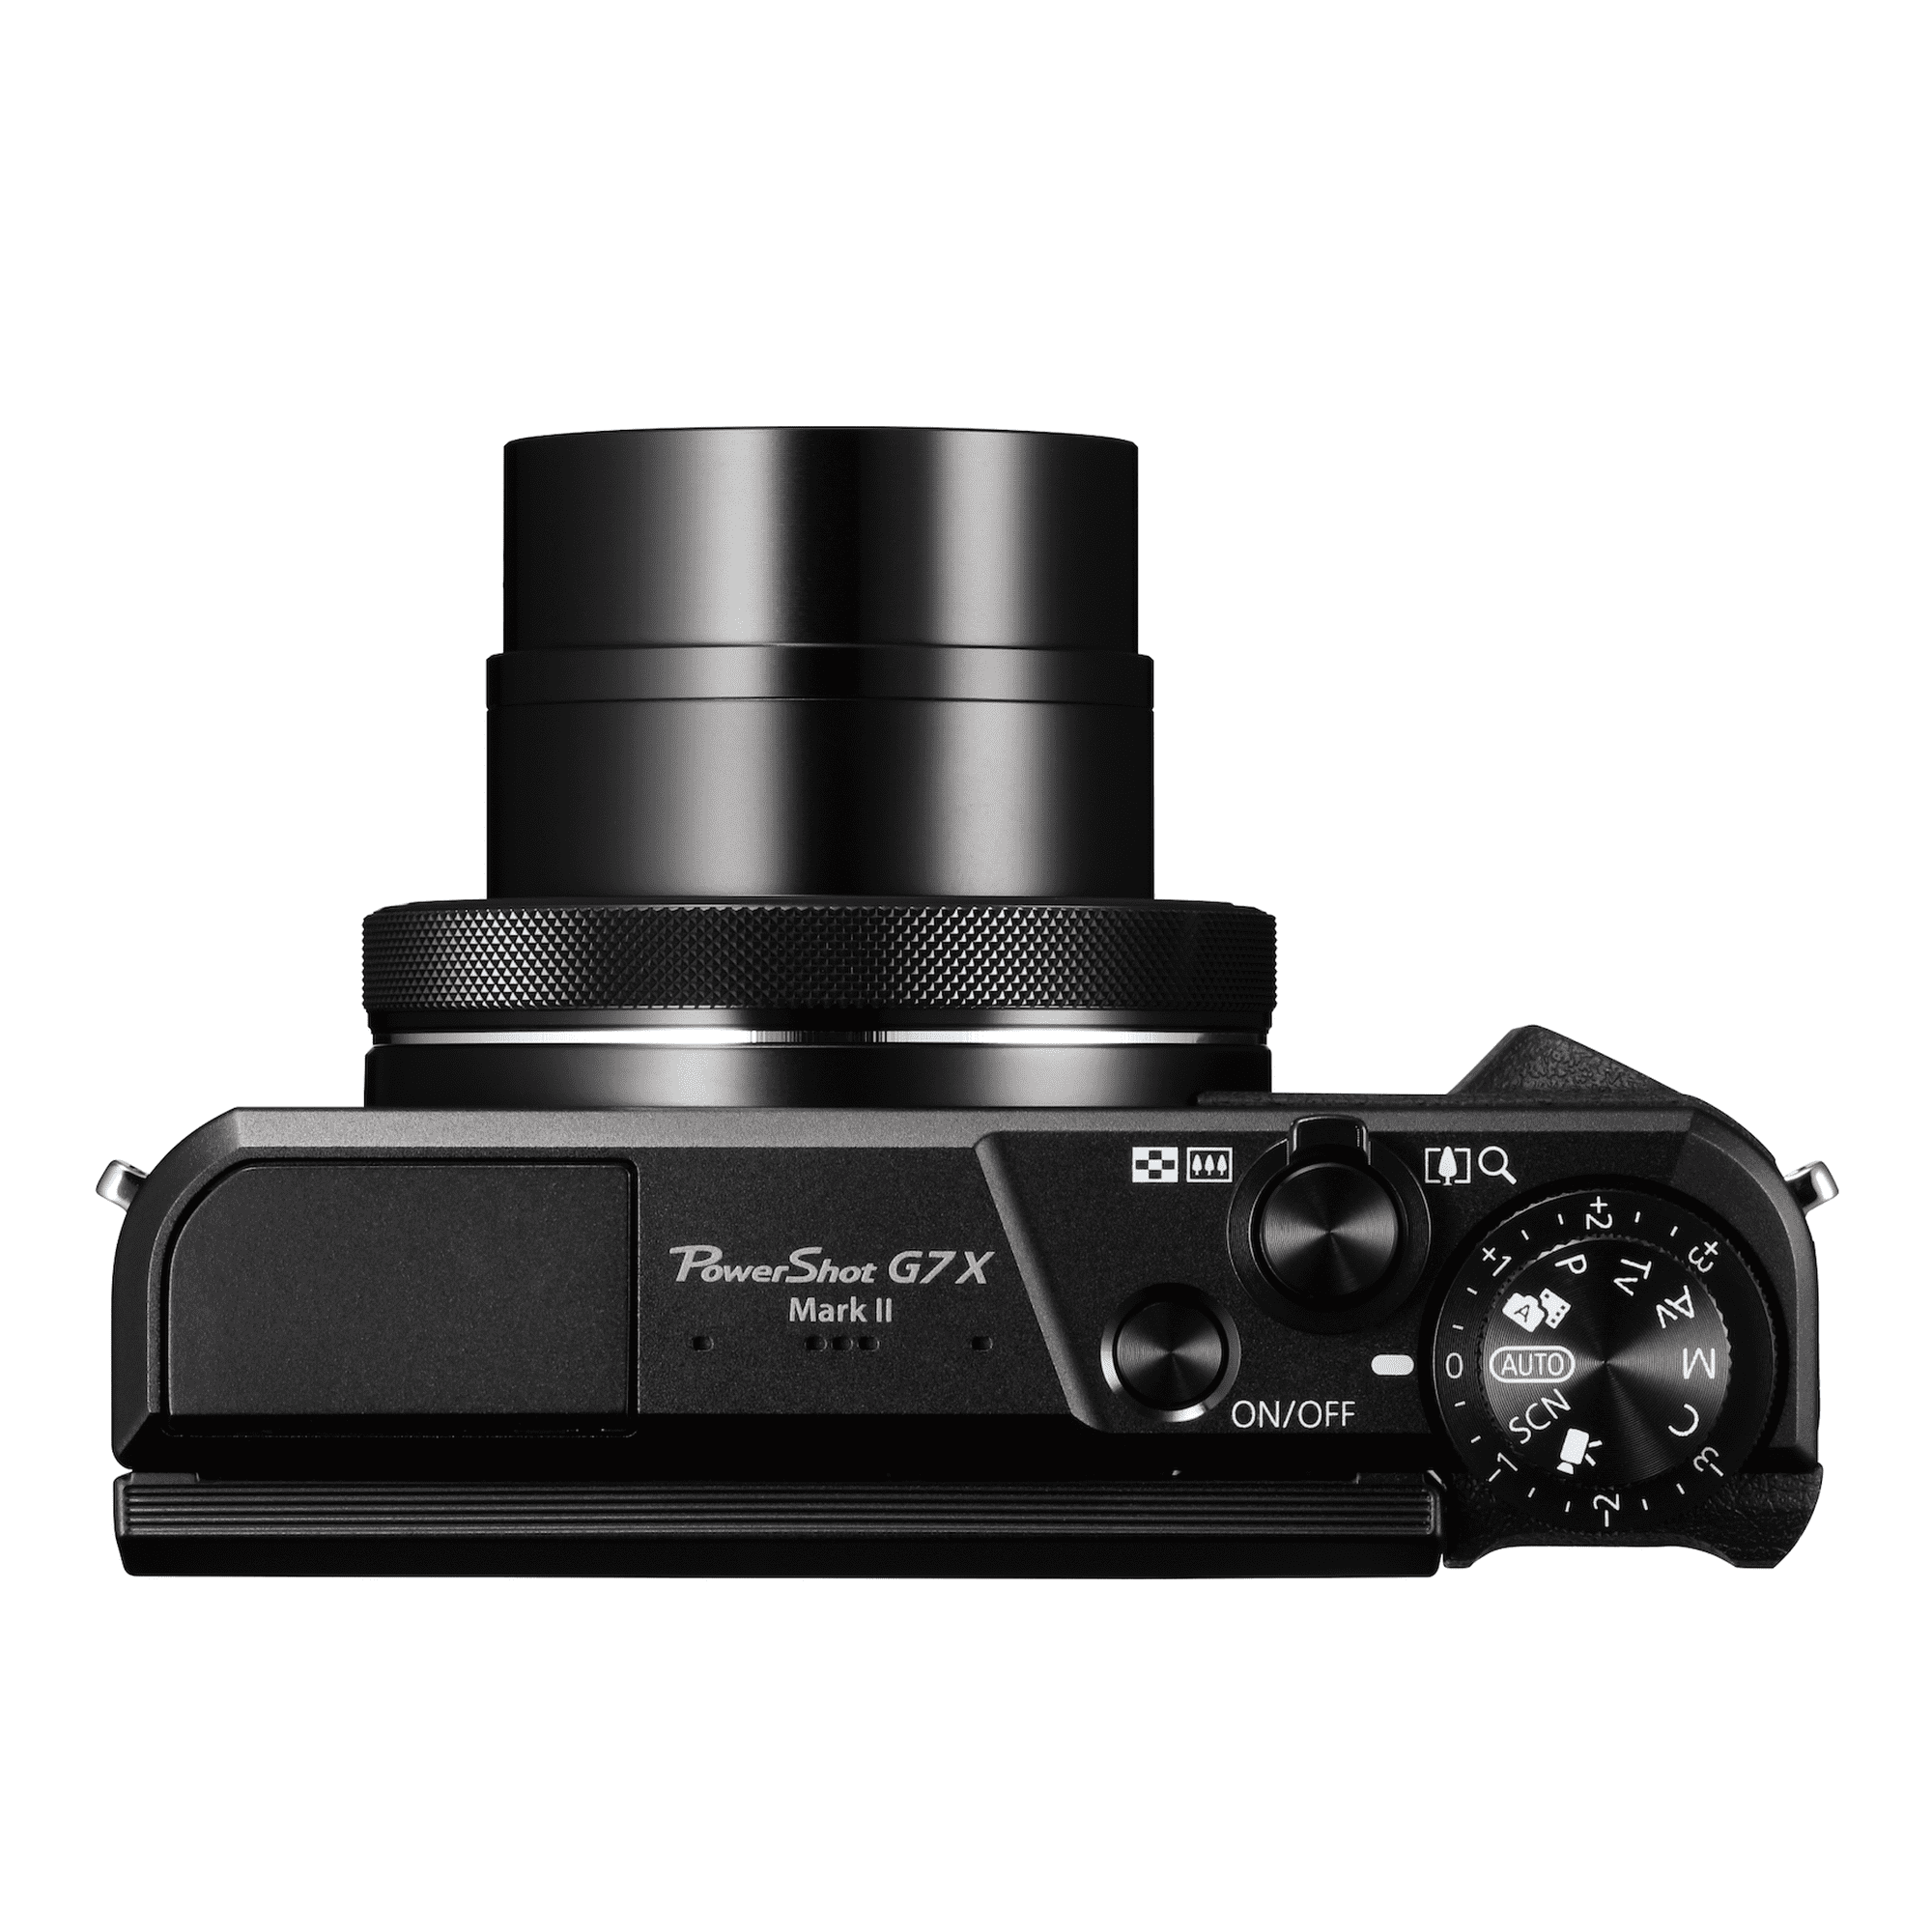 Canon PowerShot G7 X Mark III Digital Camera with Accessories